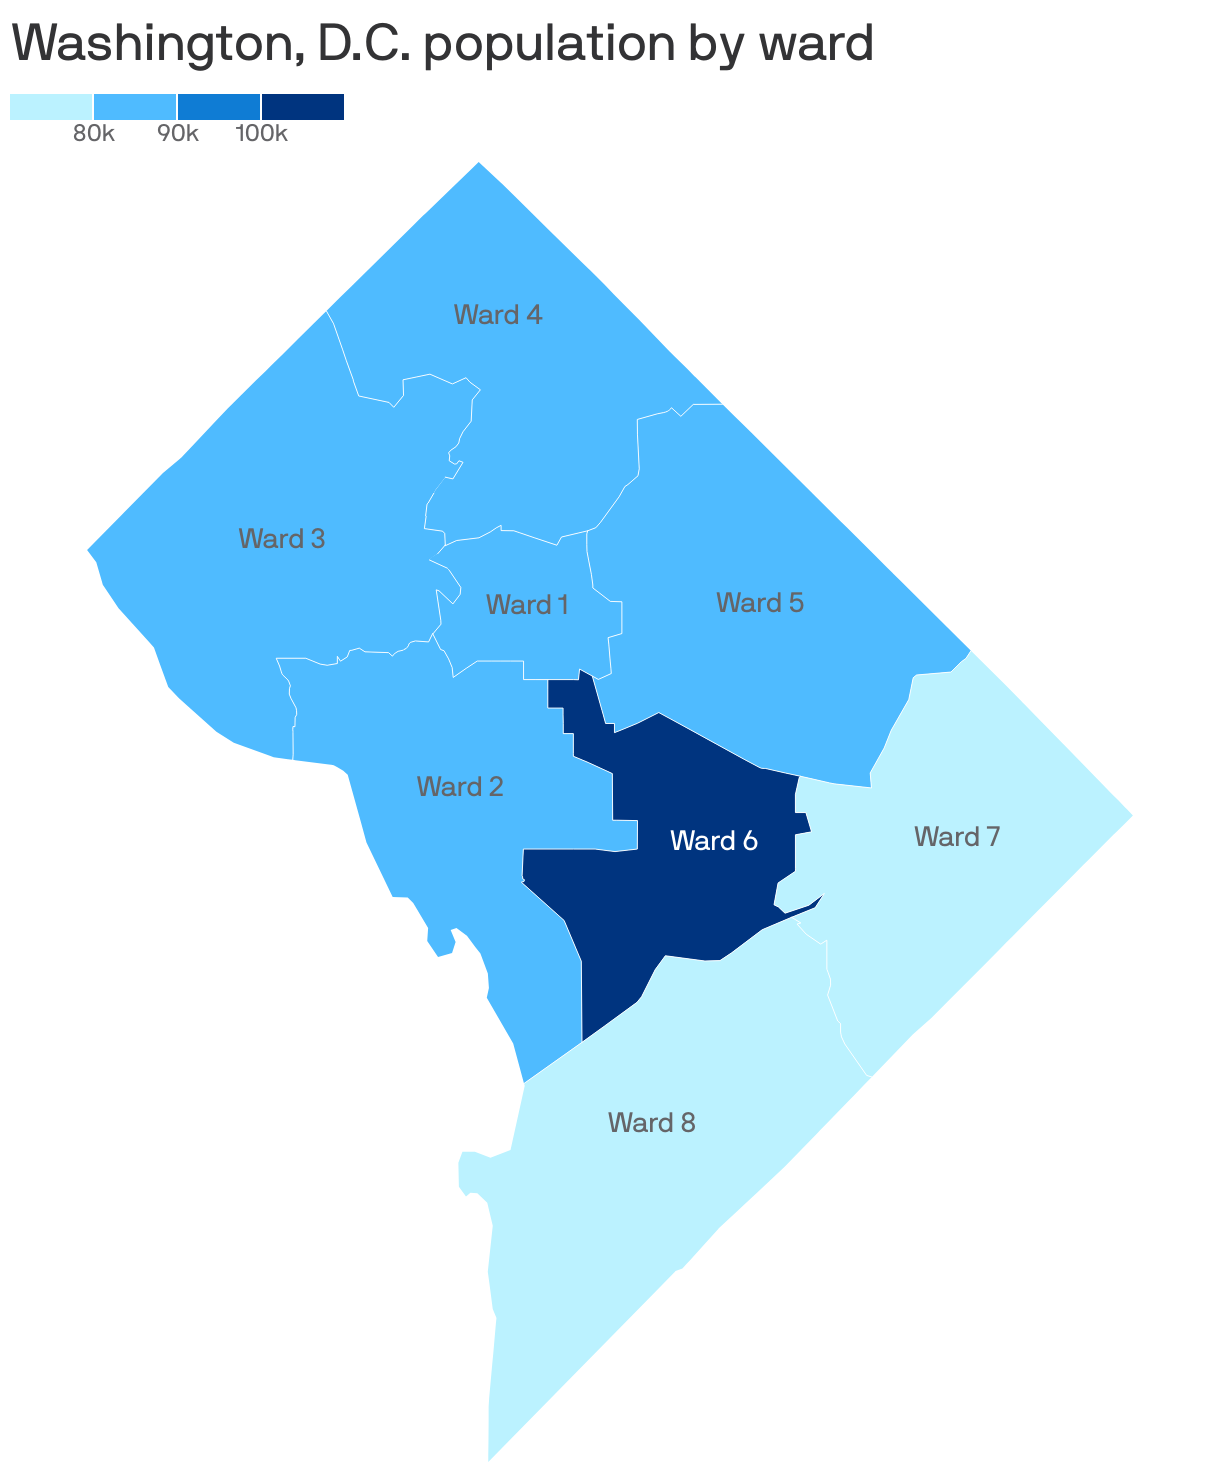 Washington, D.C. population by ward